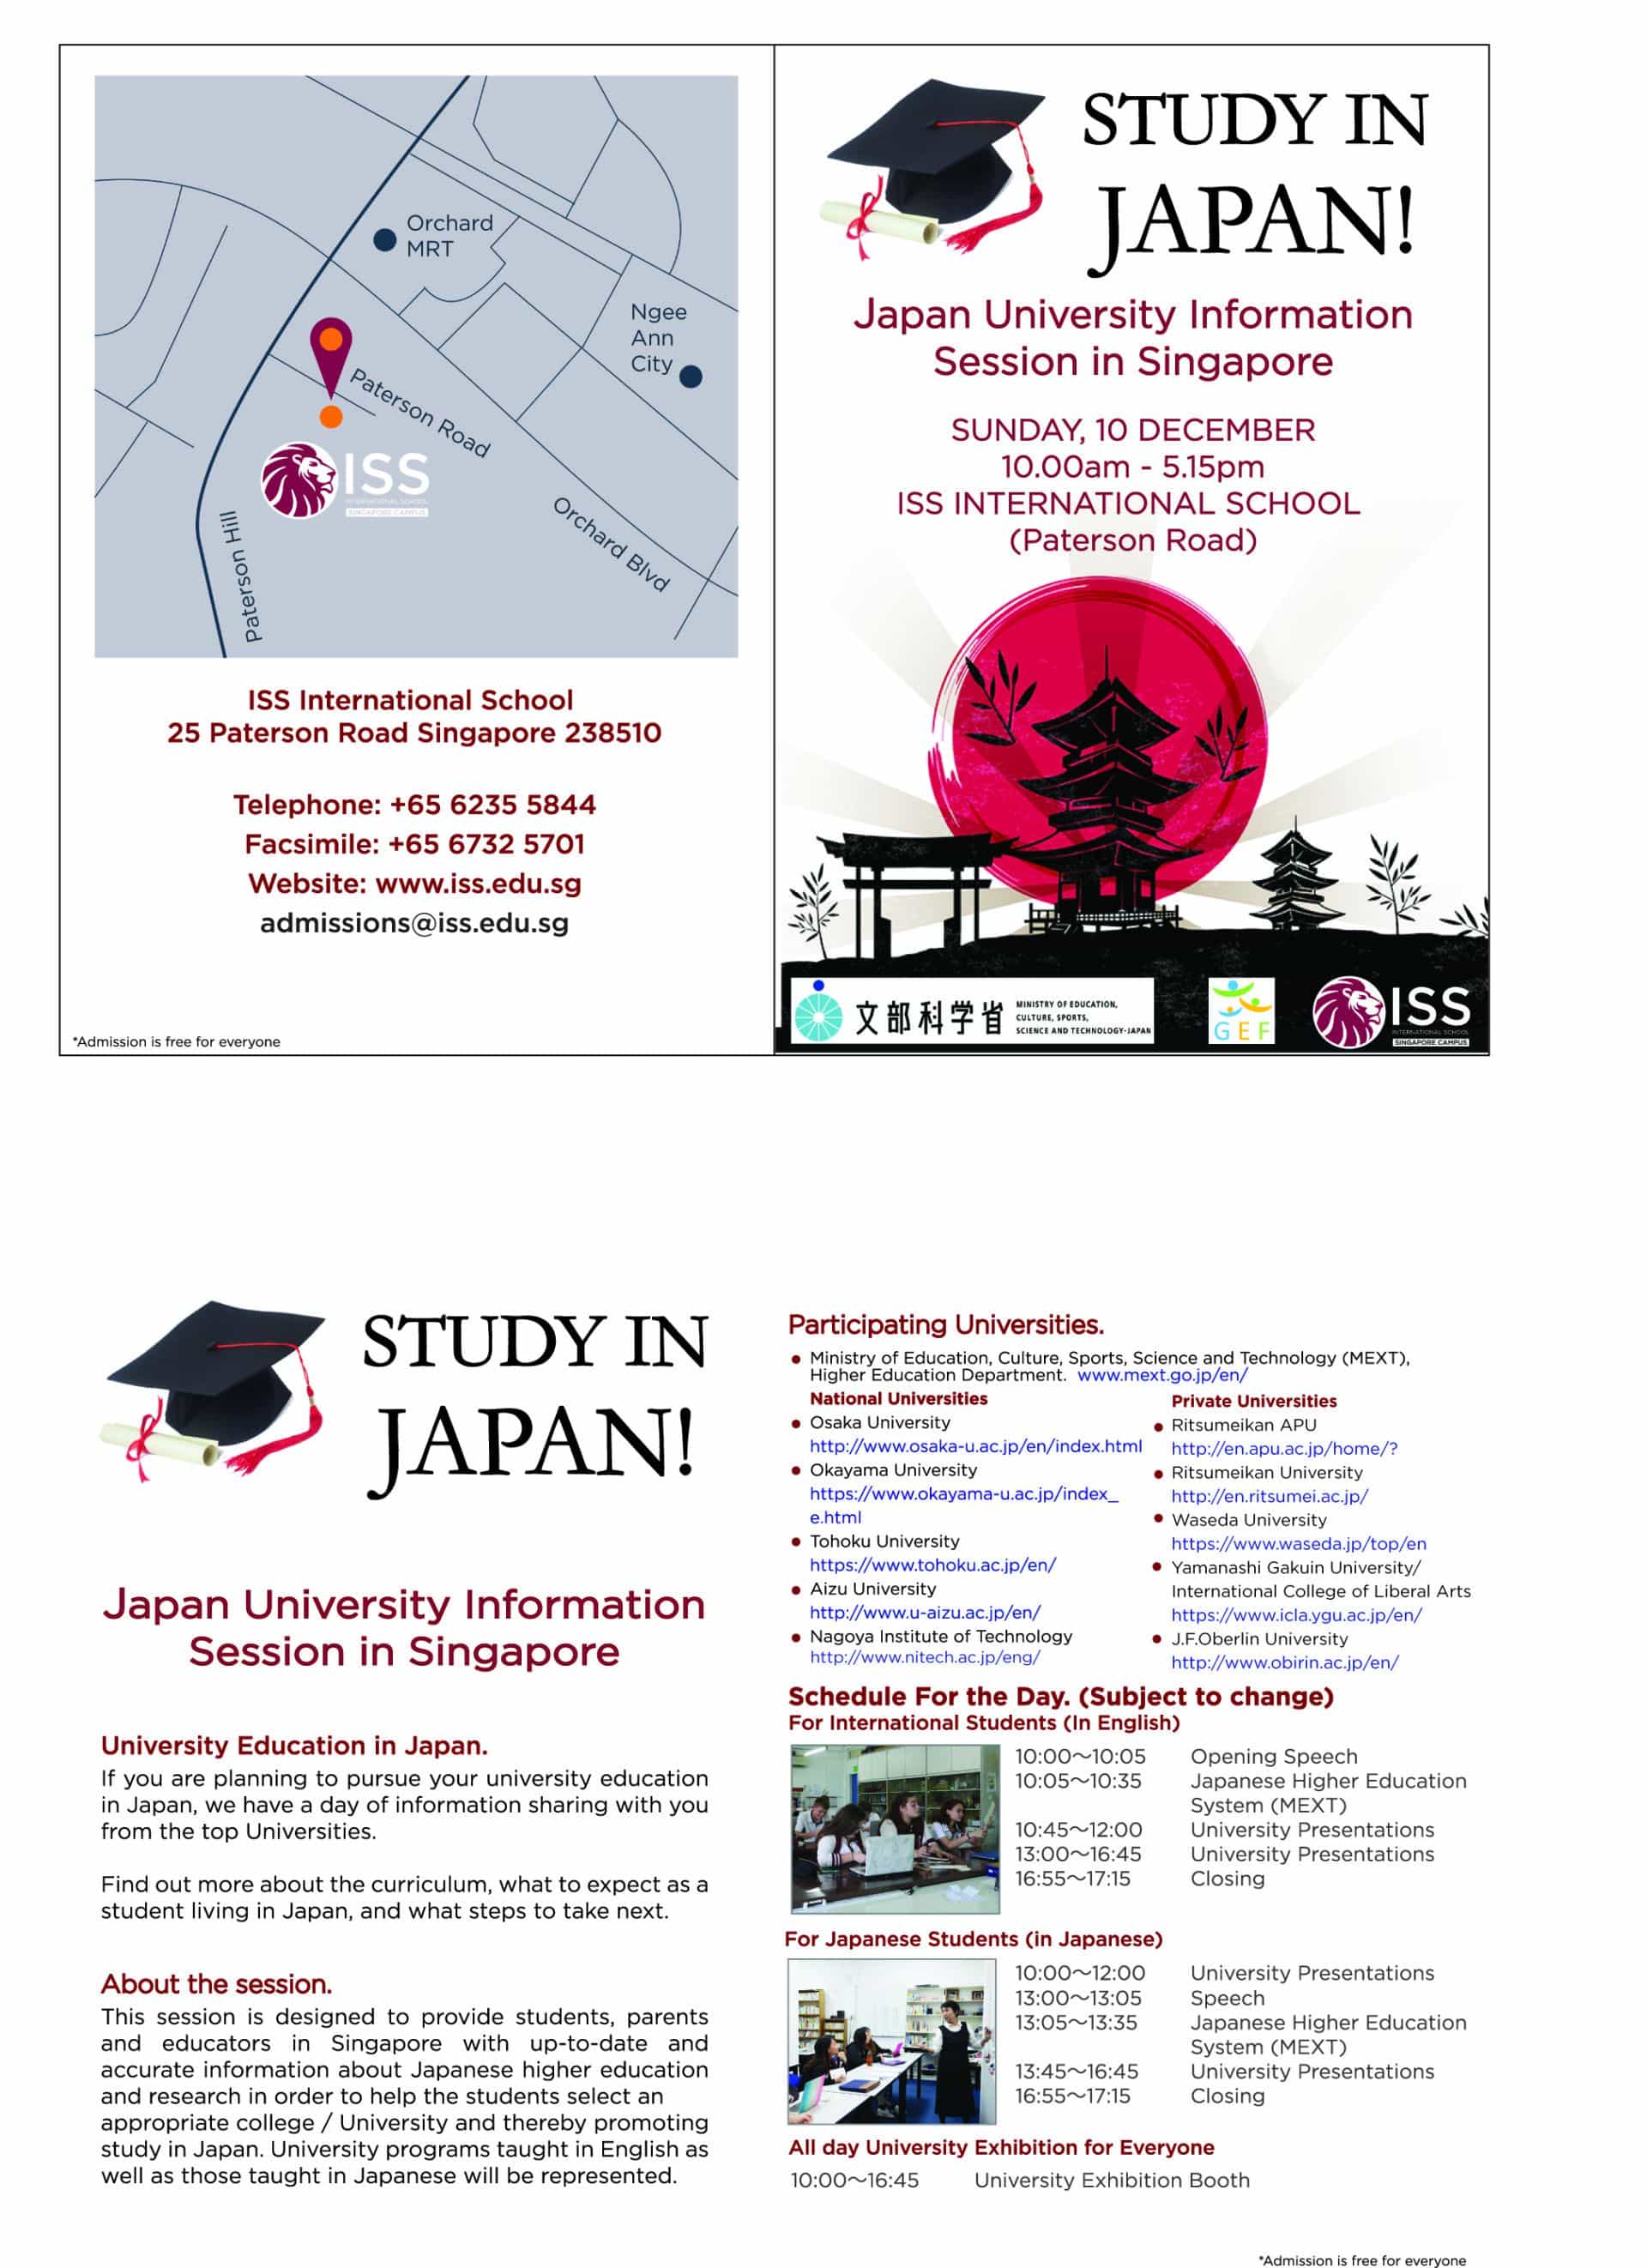 japanese-university-information